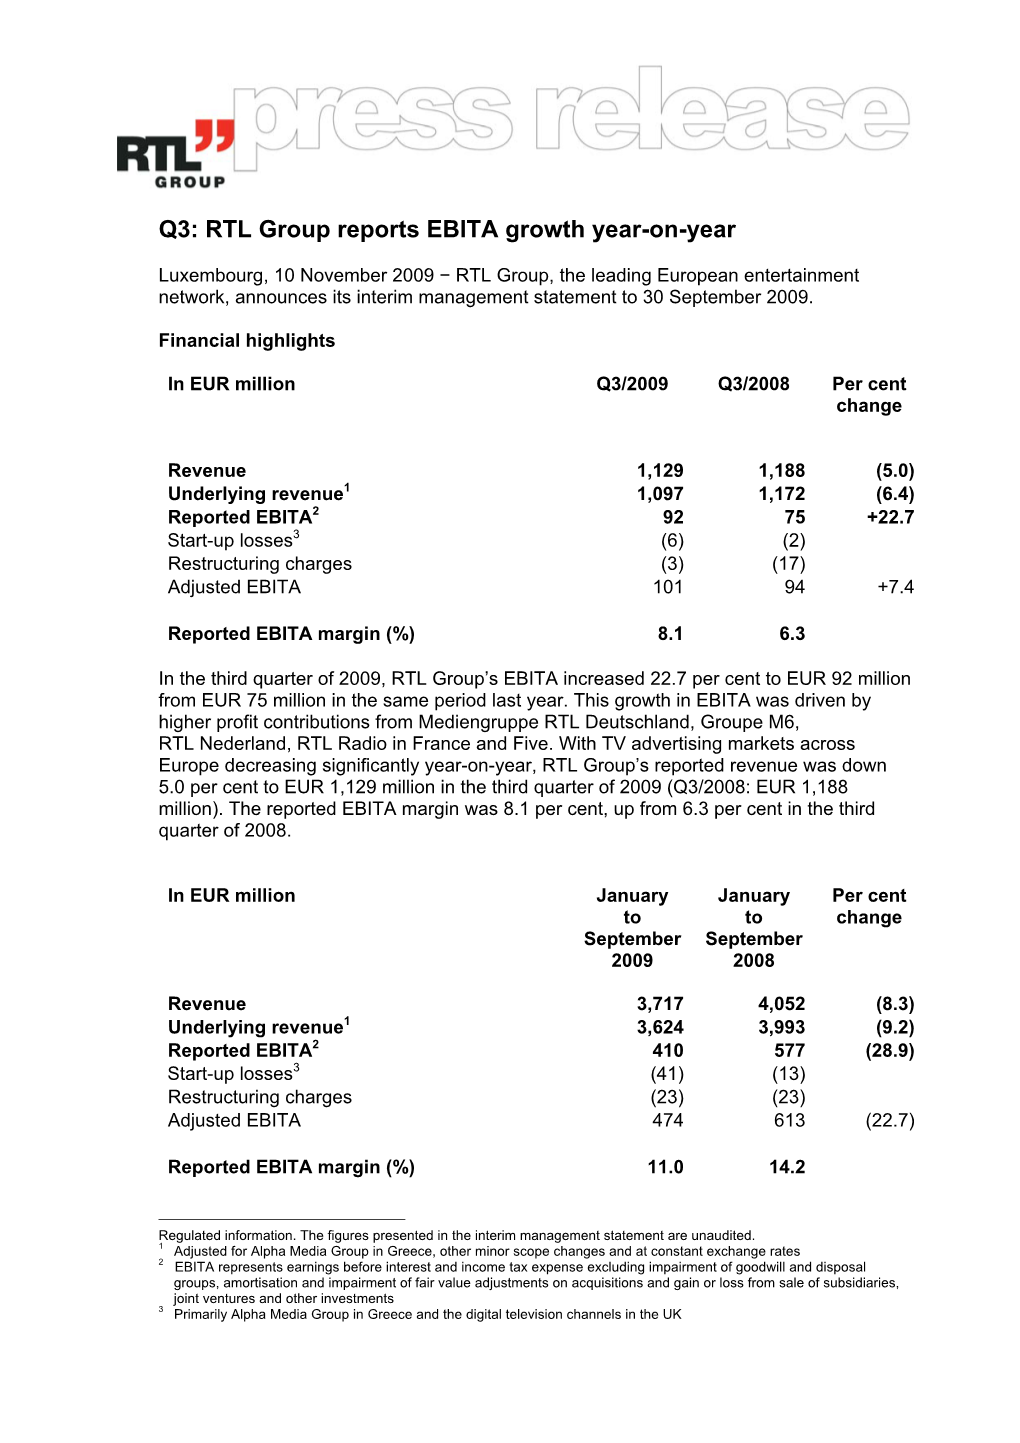 RTL Group Reports EBITA Growth Year-On-Year